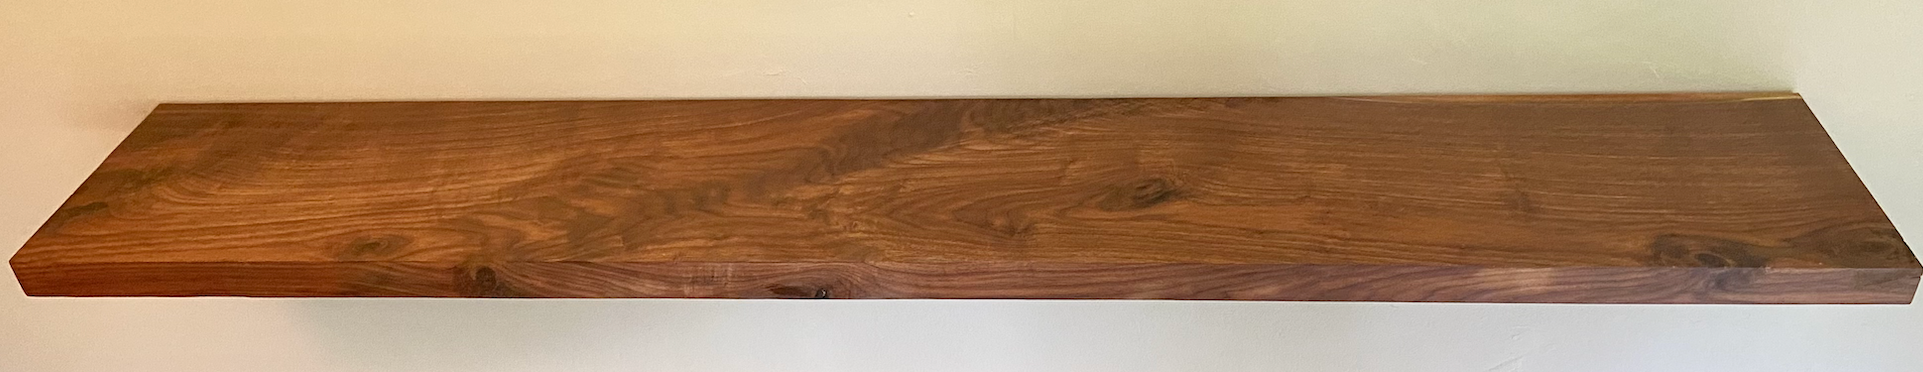  Straight Edge Black Walnut Floating Shelf|Modern Rustic Farmhouse Walnut Wood Floating Display Shelf|Solid Wood Wall Hanging Plant Shelf